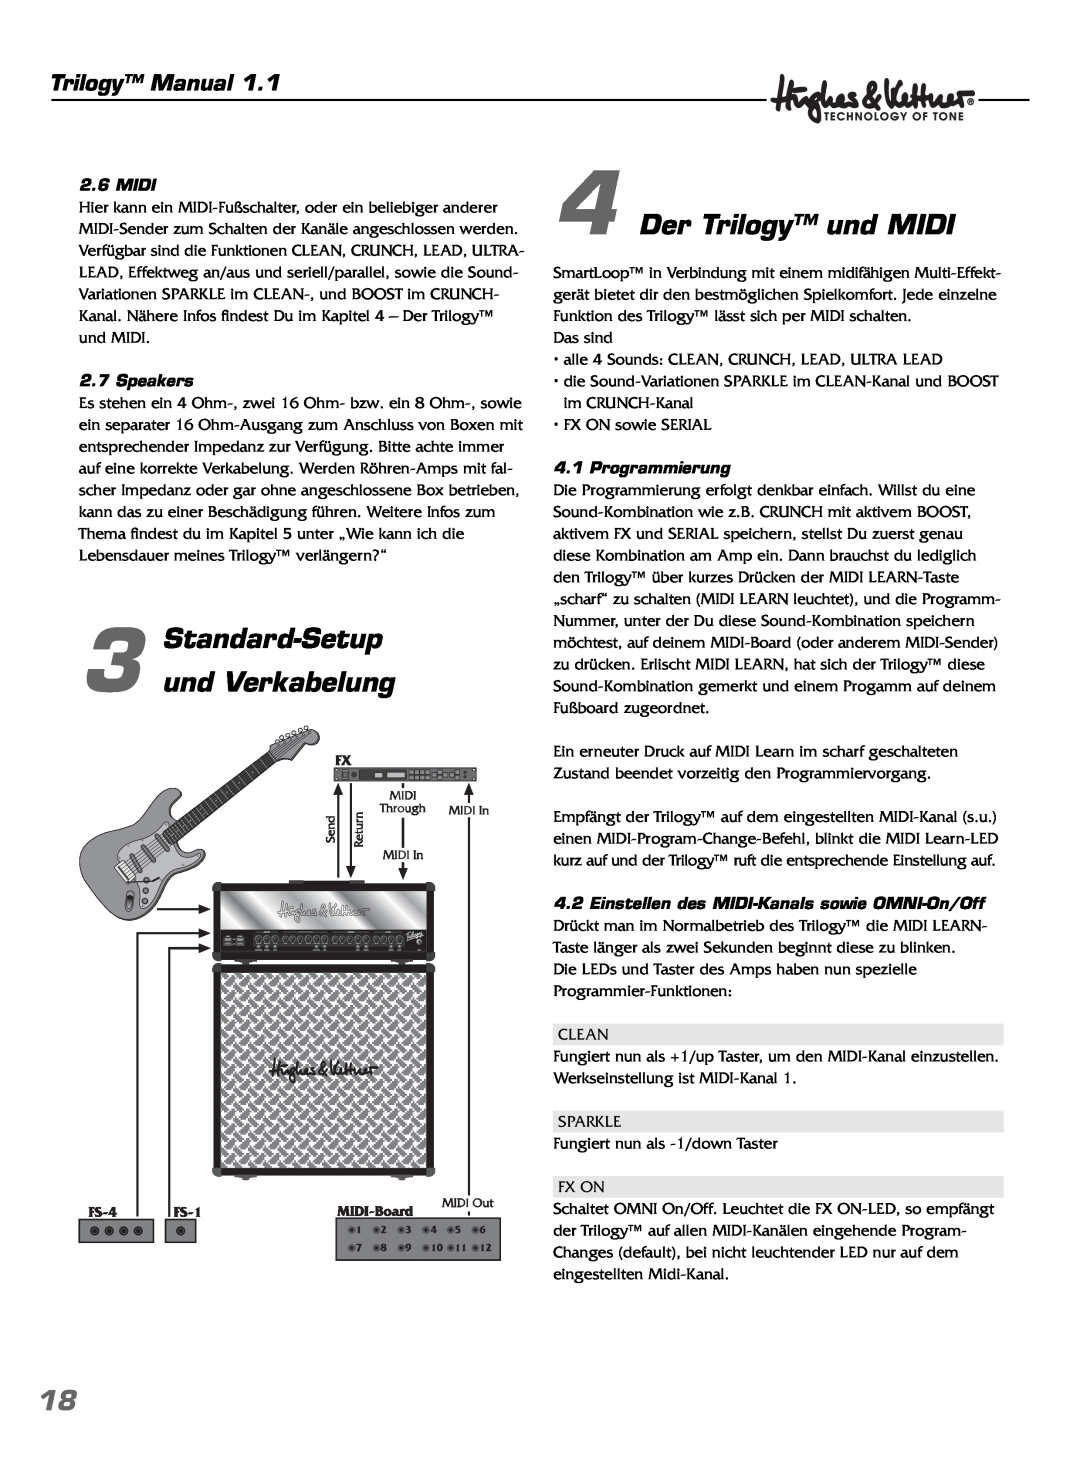 Hughes & Kettner TrilogyTM manual Standard-Setup 3 und Verkabelung, Der Trilogy und MIDI, Trilogy Manual, Midi, Speakers 